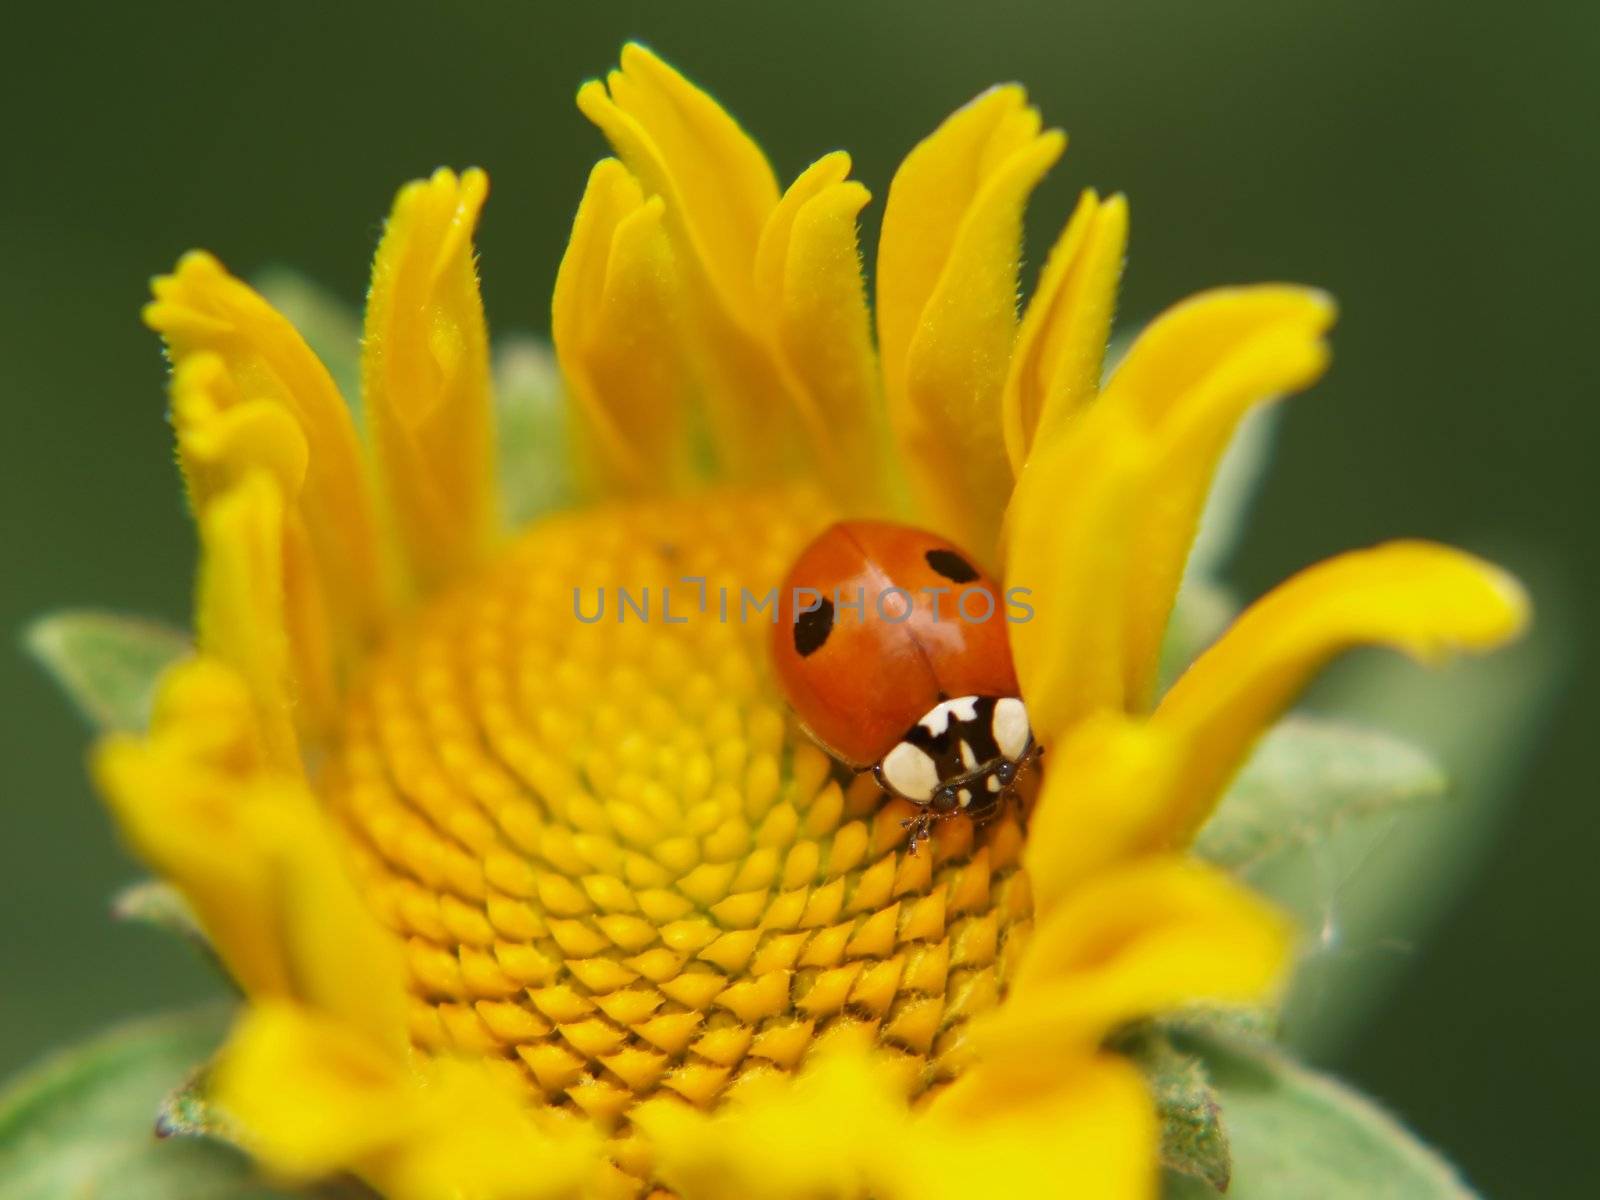 Ladybird in a yellow flower